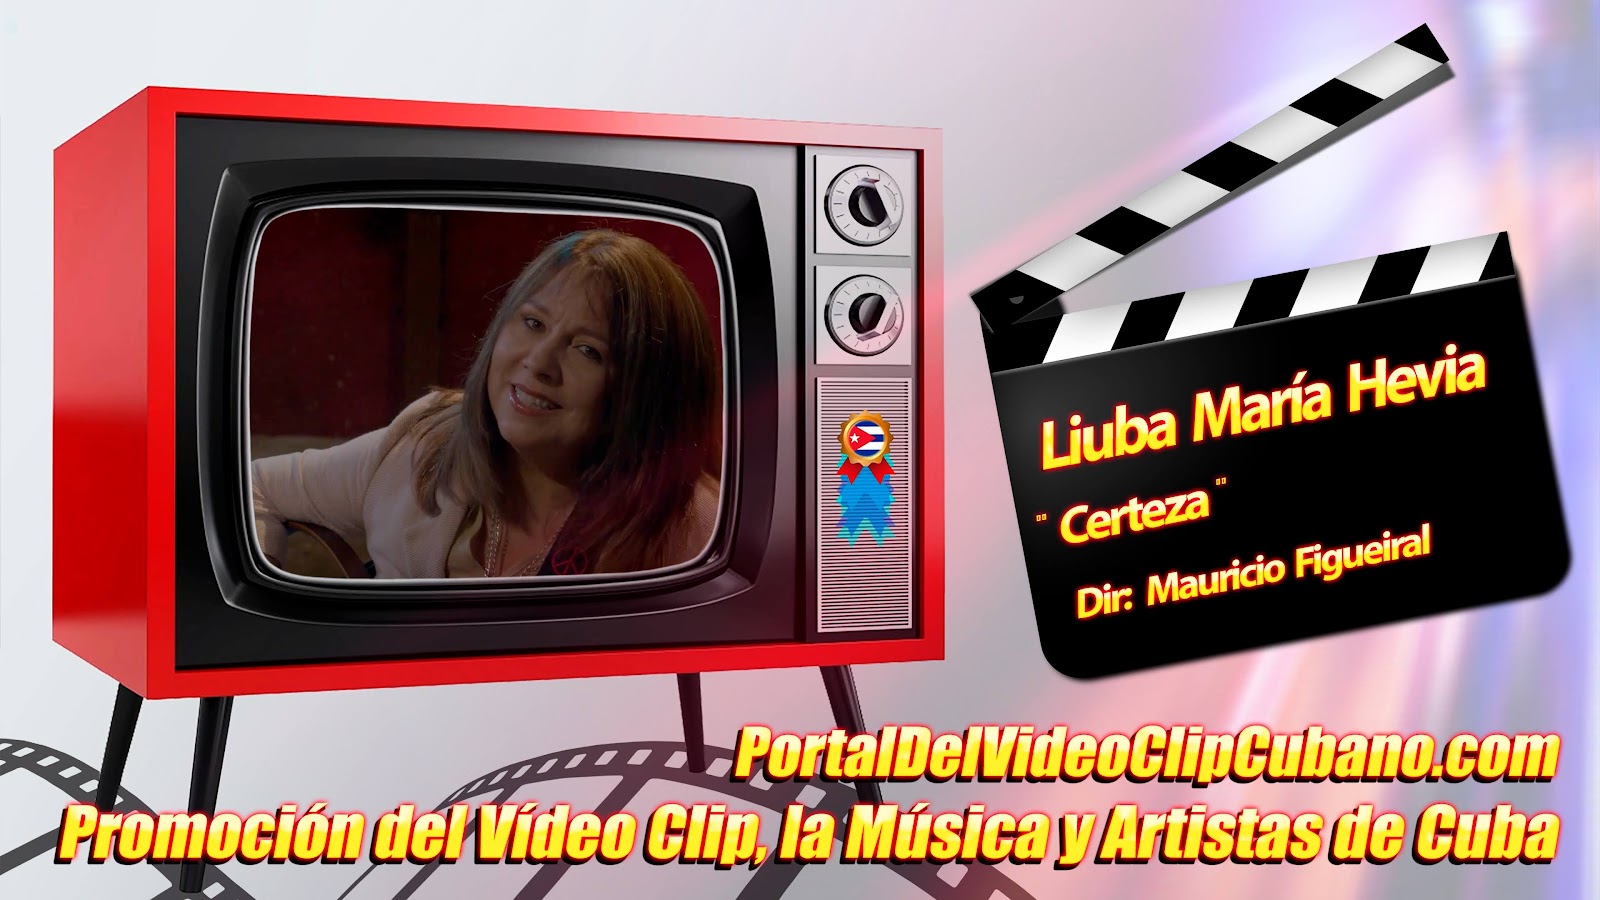 Liuba María Hevia - ¨Certeza¨ - Director: Mauricio Figueiral. Portal Del Vídeo Clip Cubano. Música Cubana. Canción. CUBA.